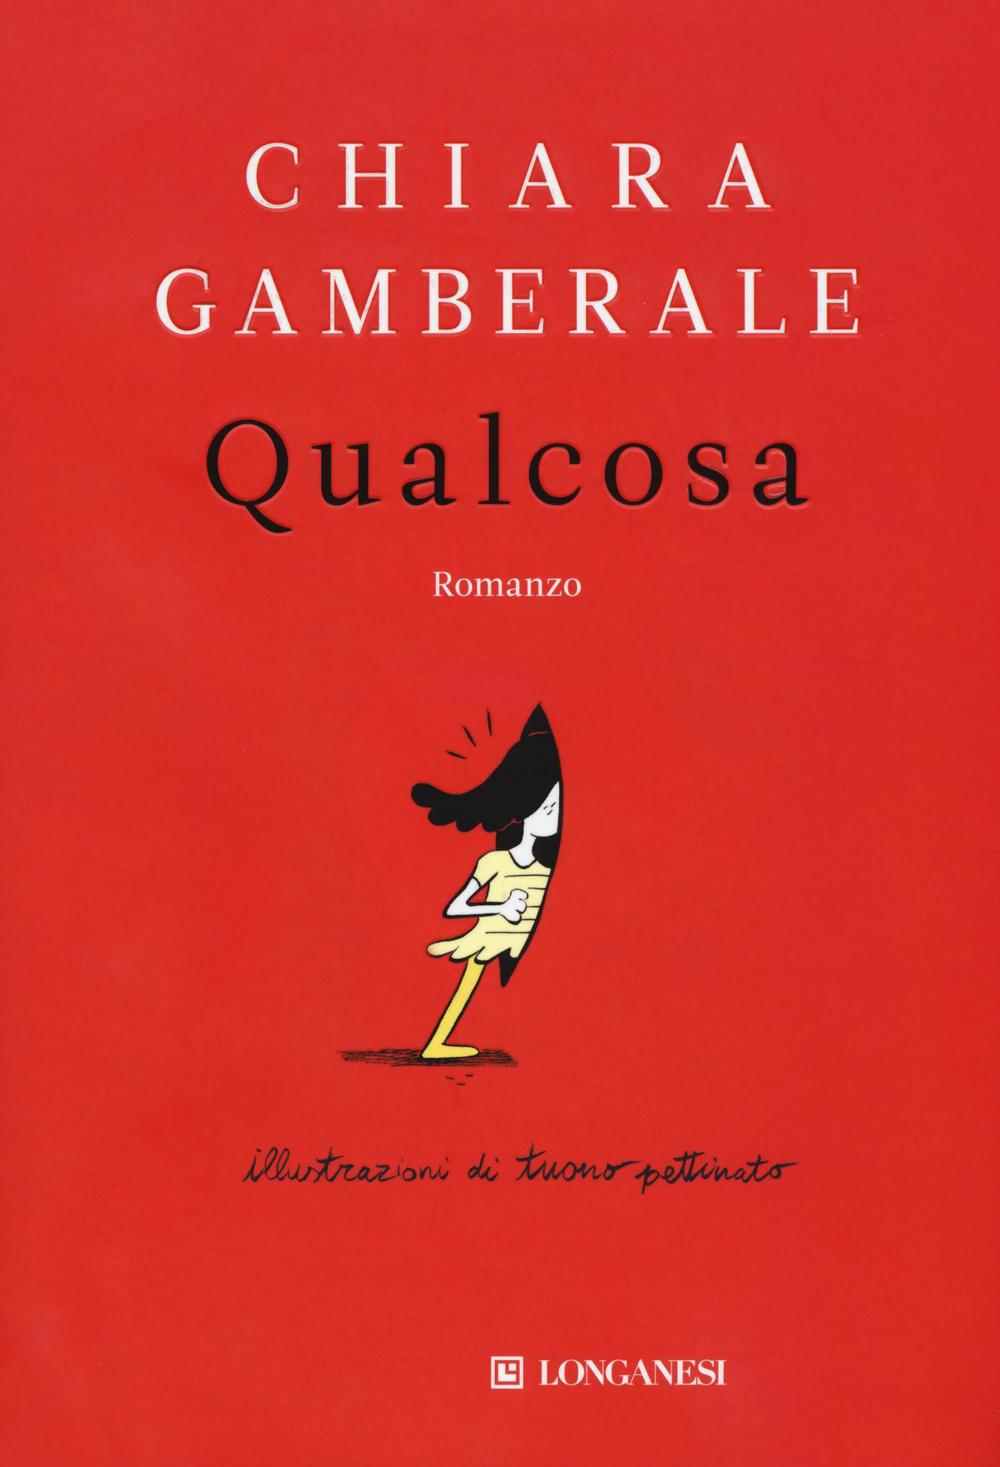 Kniha Qualcosa Chiara Gamberale